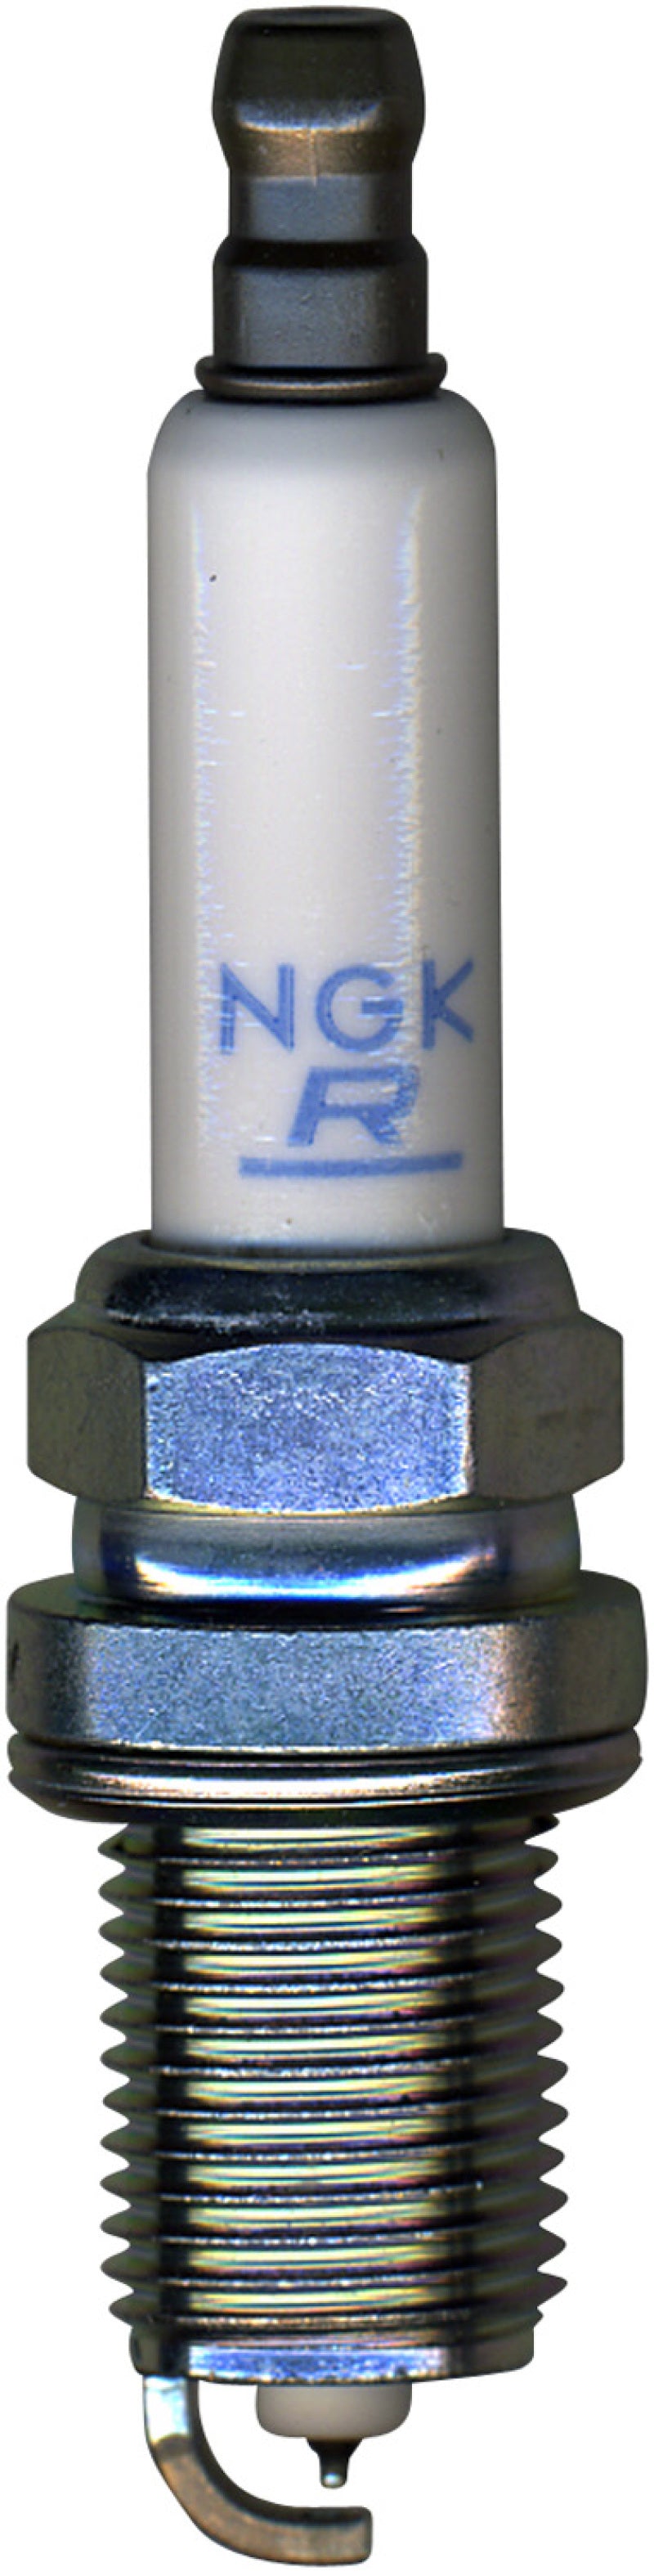 NGK Double Platinum Spark Plug Box of 4 (PFR7S8EG) -  Shop now at Performance Car Parts